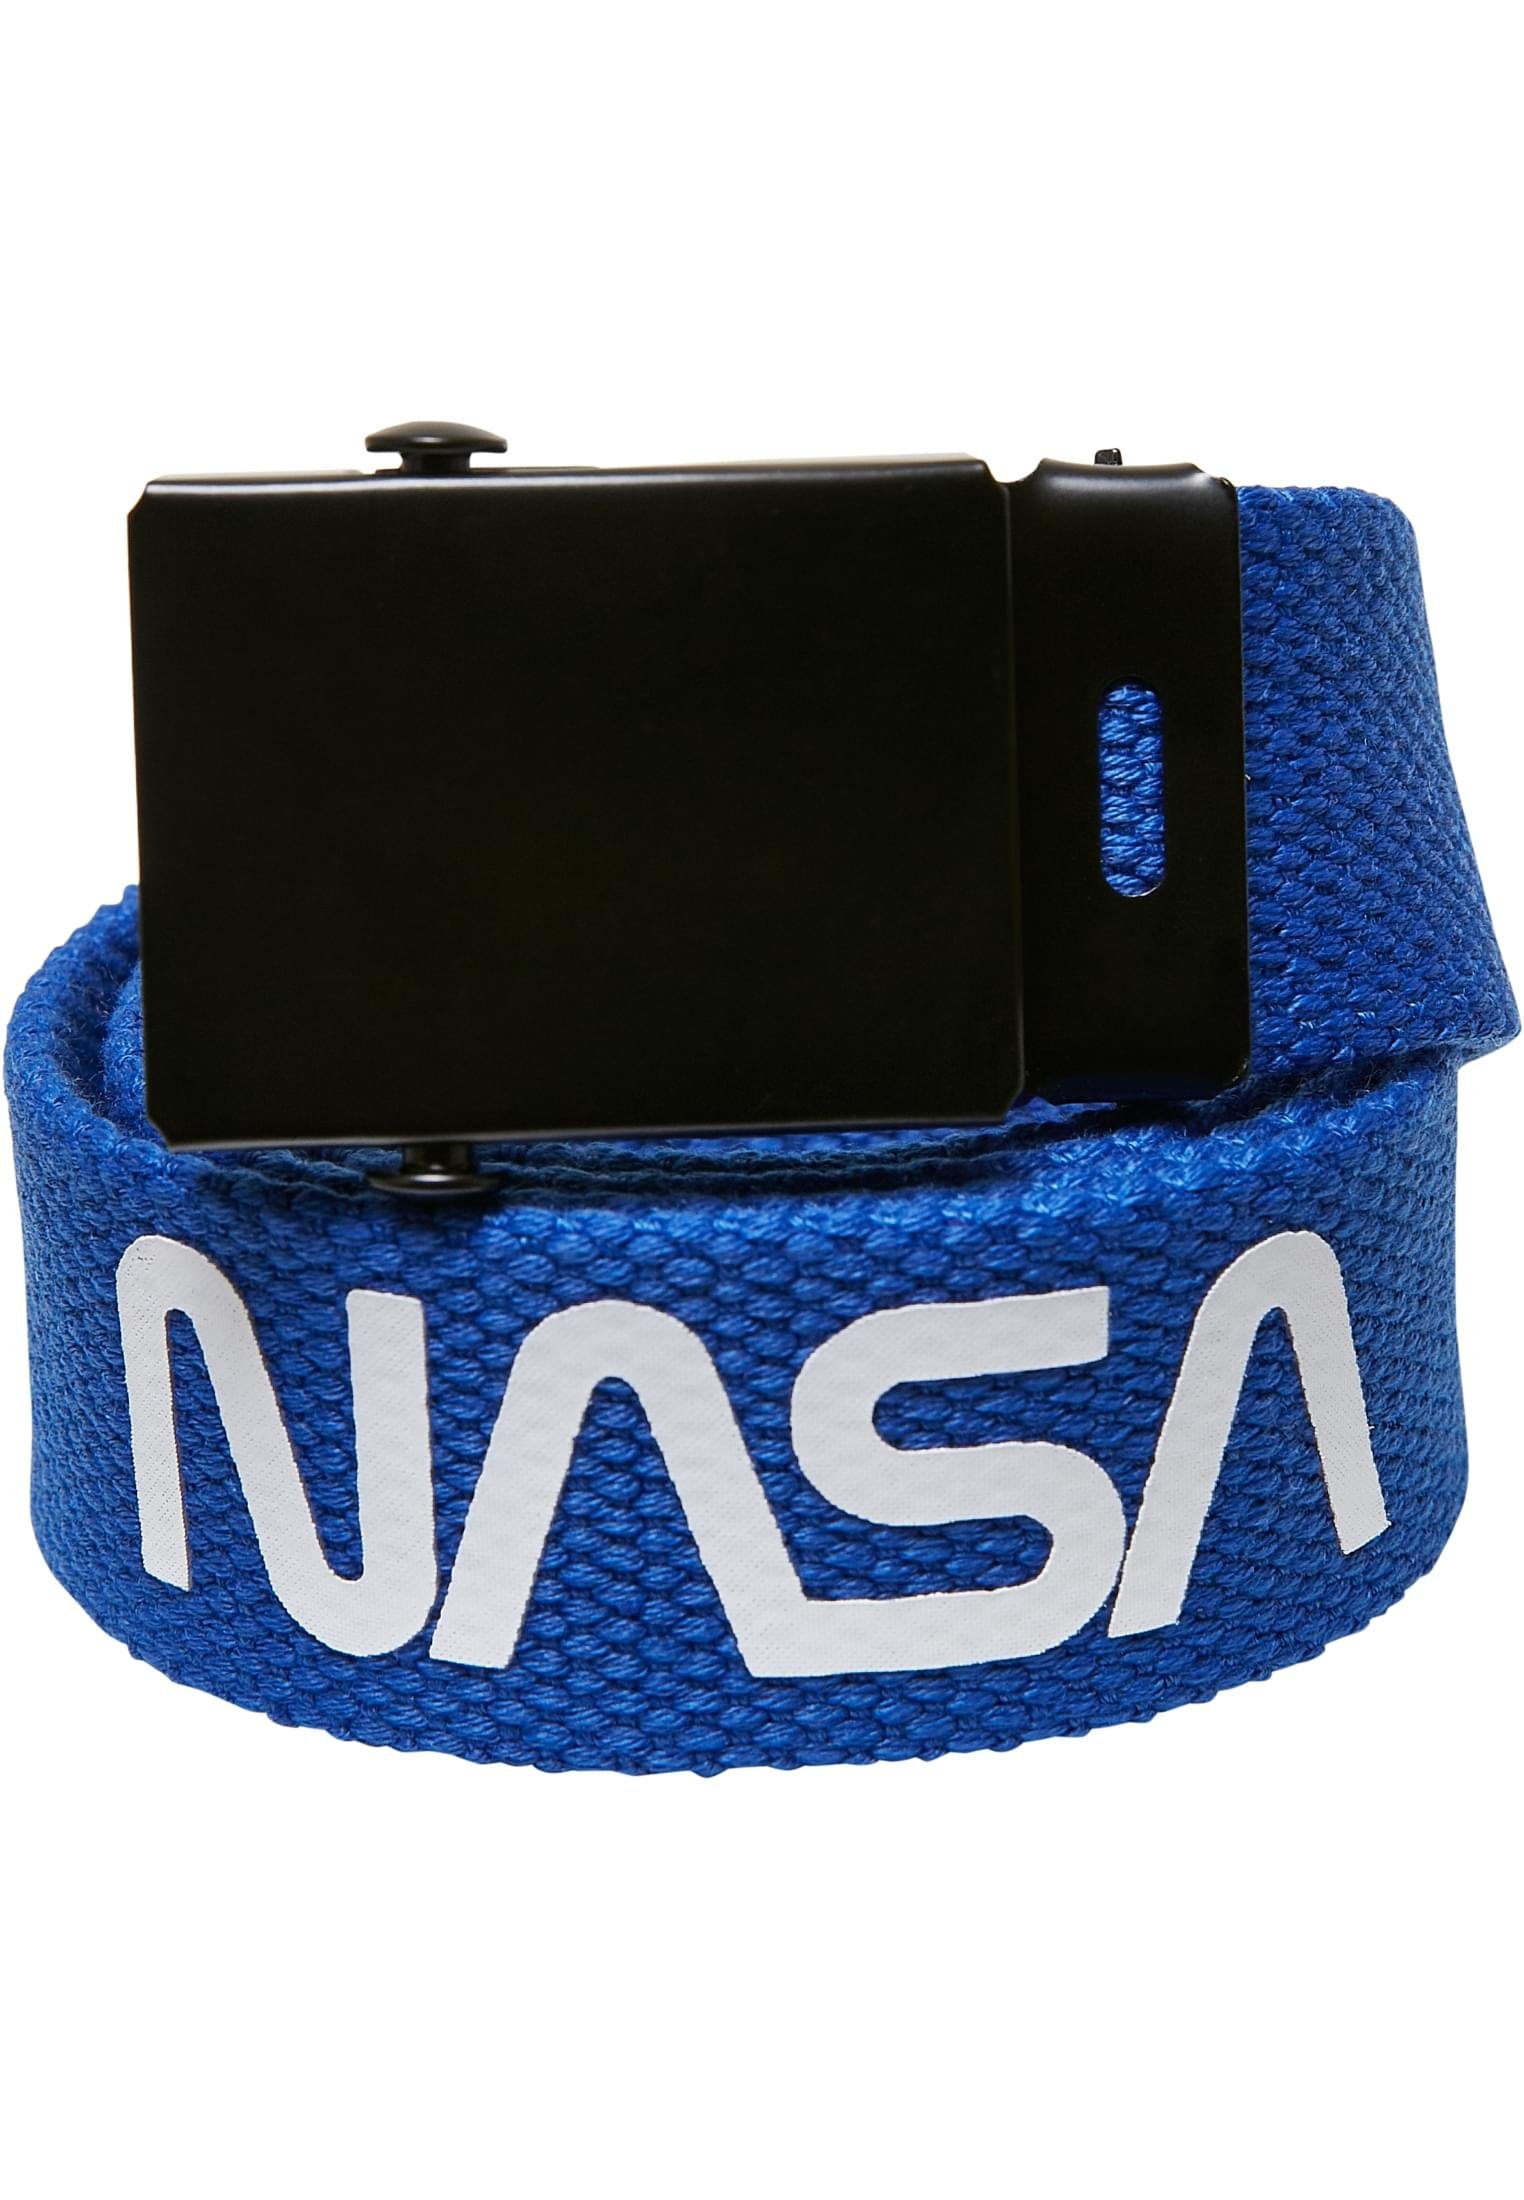 Belt Hüftgürtel white/blue MisterTee NASA Kids 2-Pack Accessoires